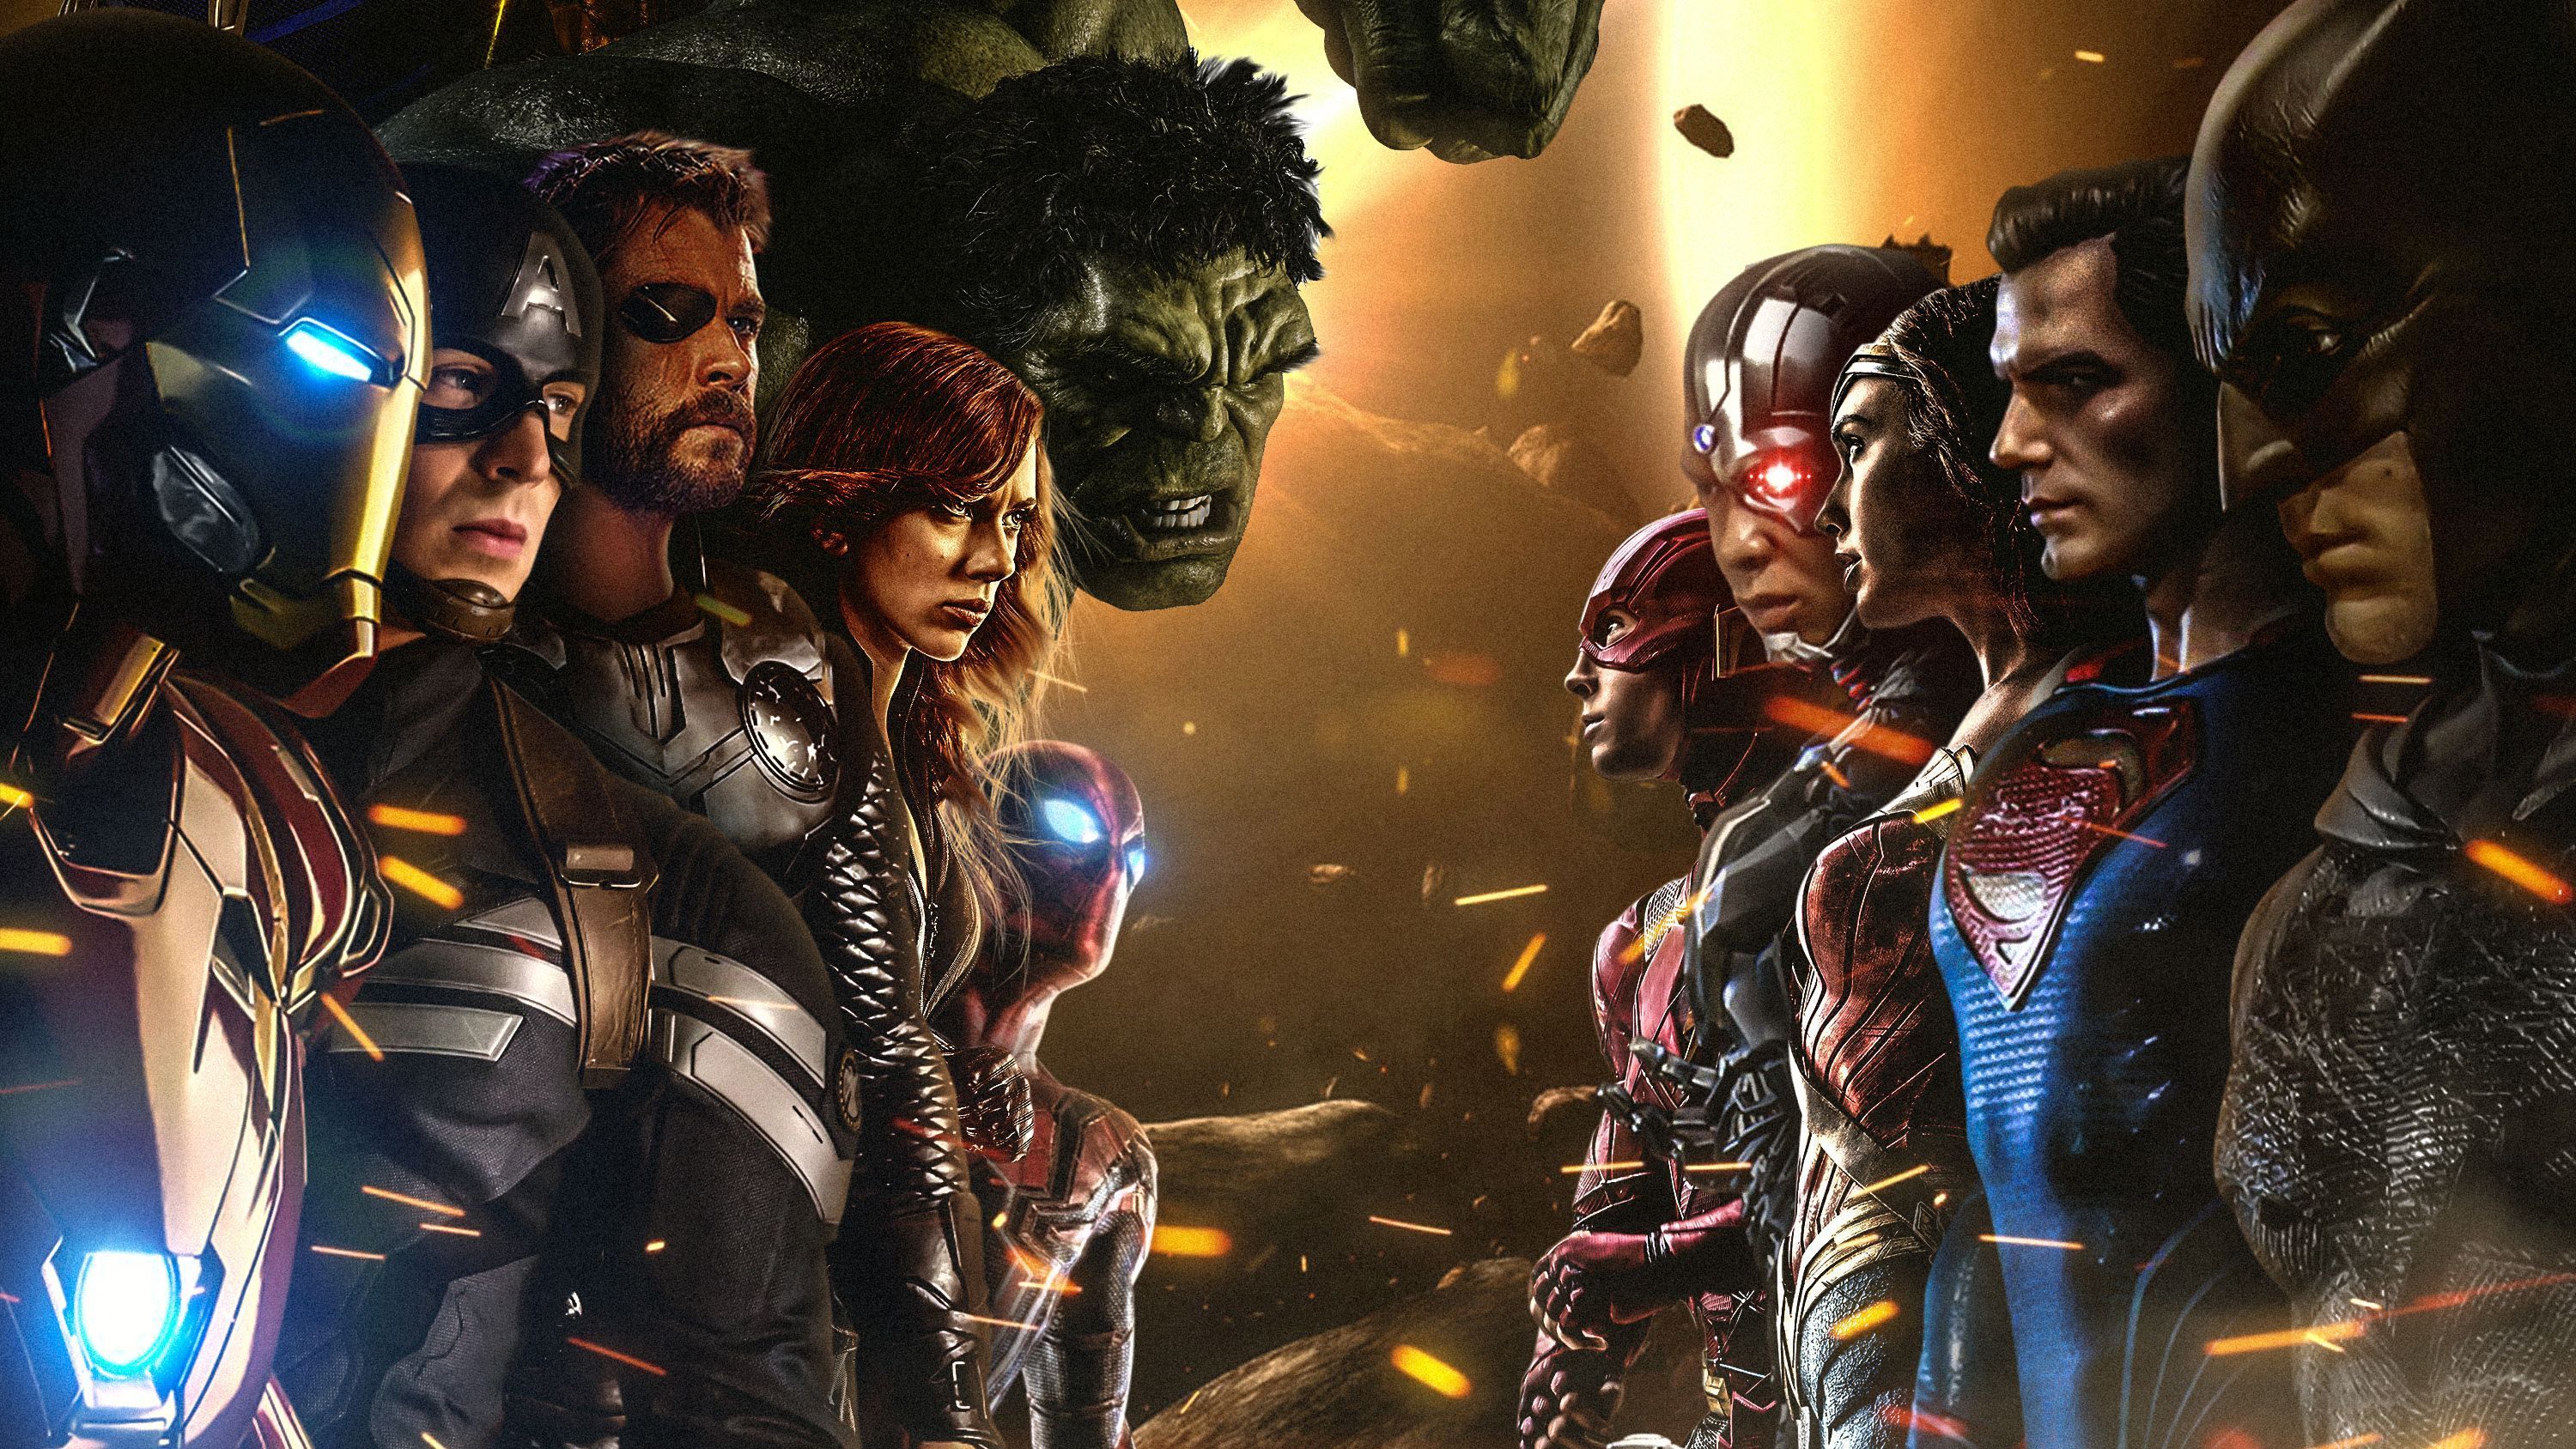 Avengers vs Justice League Wallpaper Free Avengers vs Justice League Background